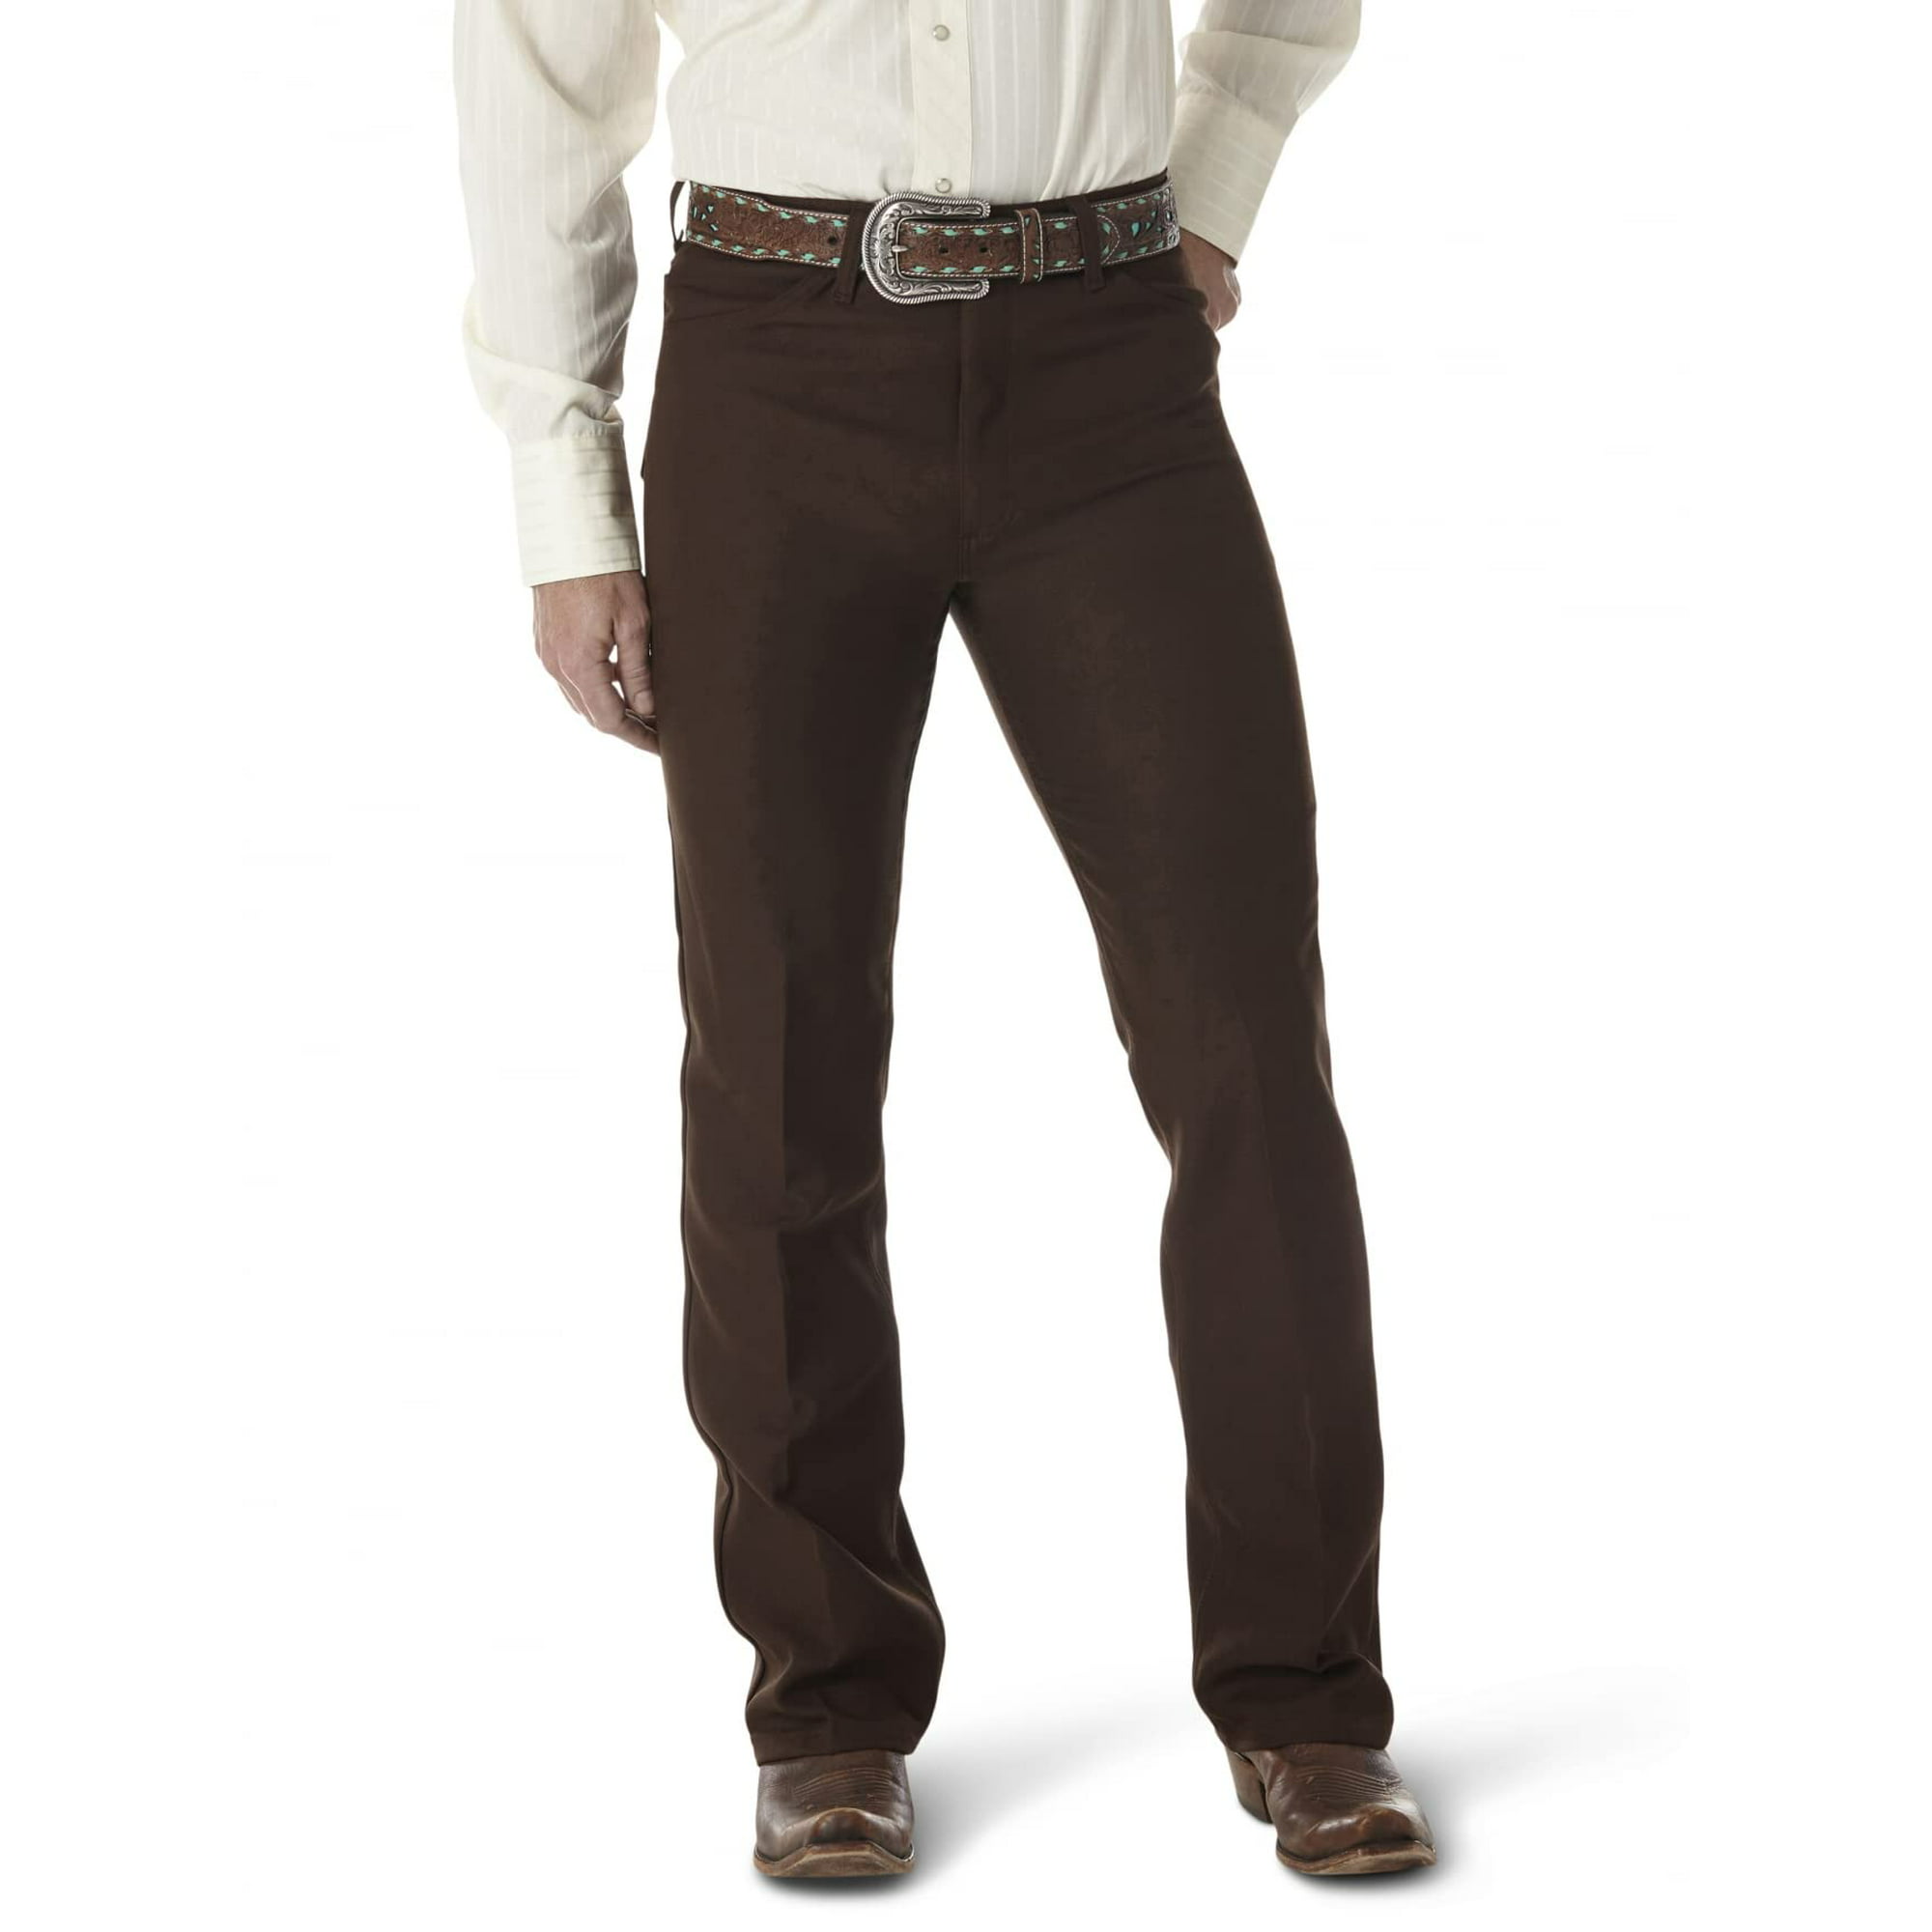 Wrangler Men's Wrancher Dress Jean,Brown,28x30 | Walmart Canada